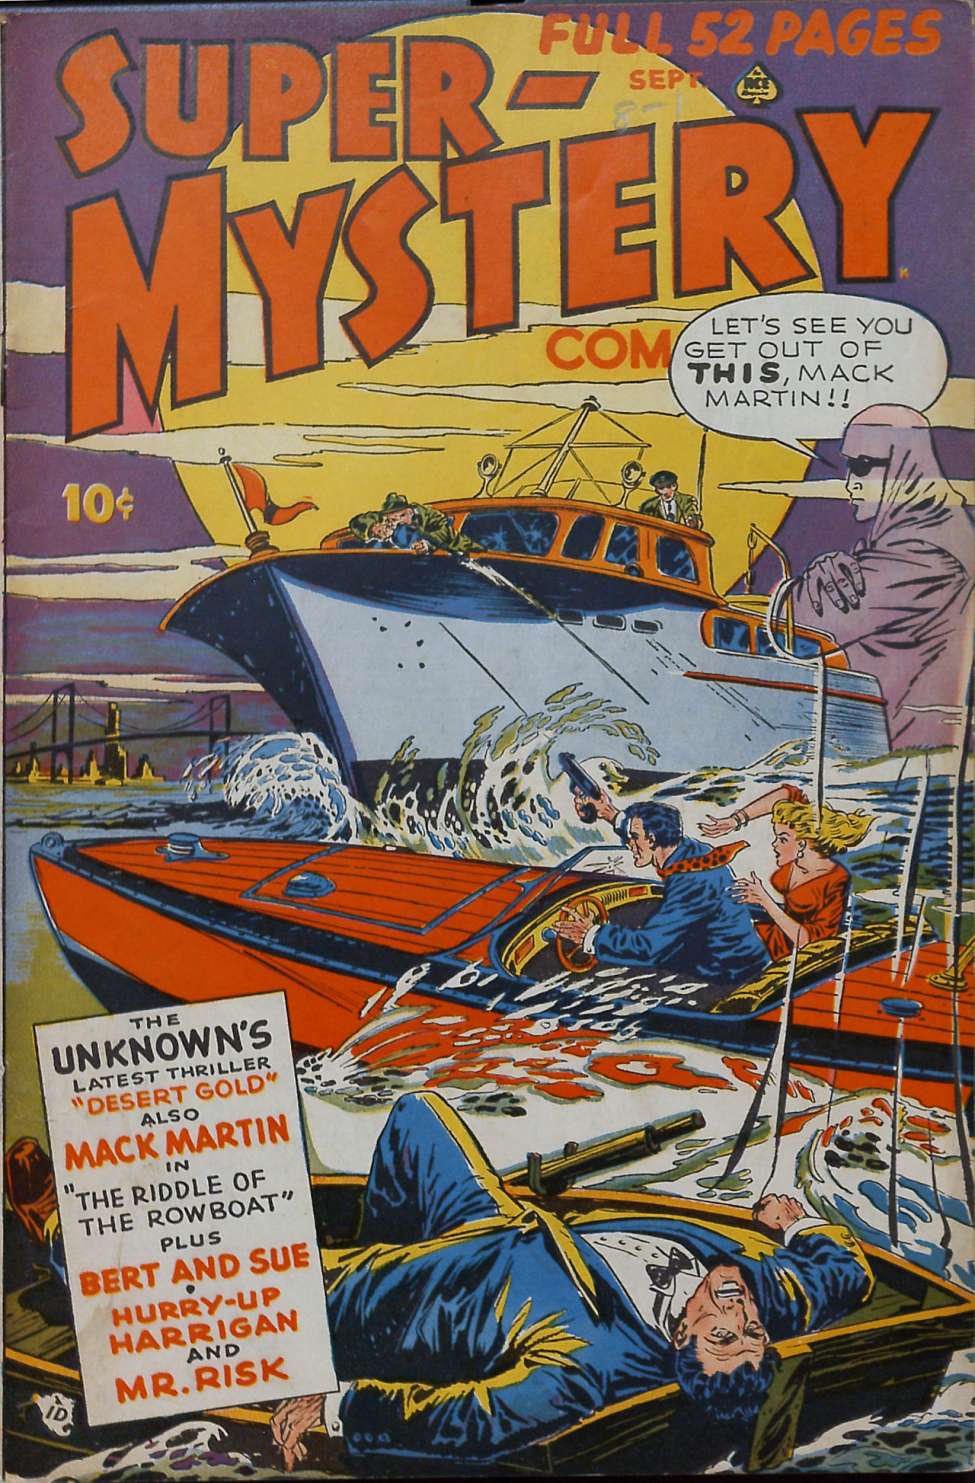 Comic Book Cover For Super-Mystery Comics v8 1